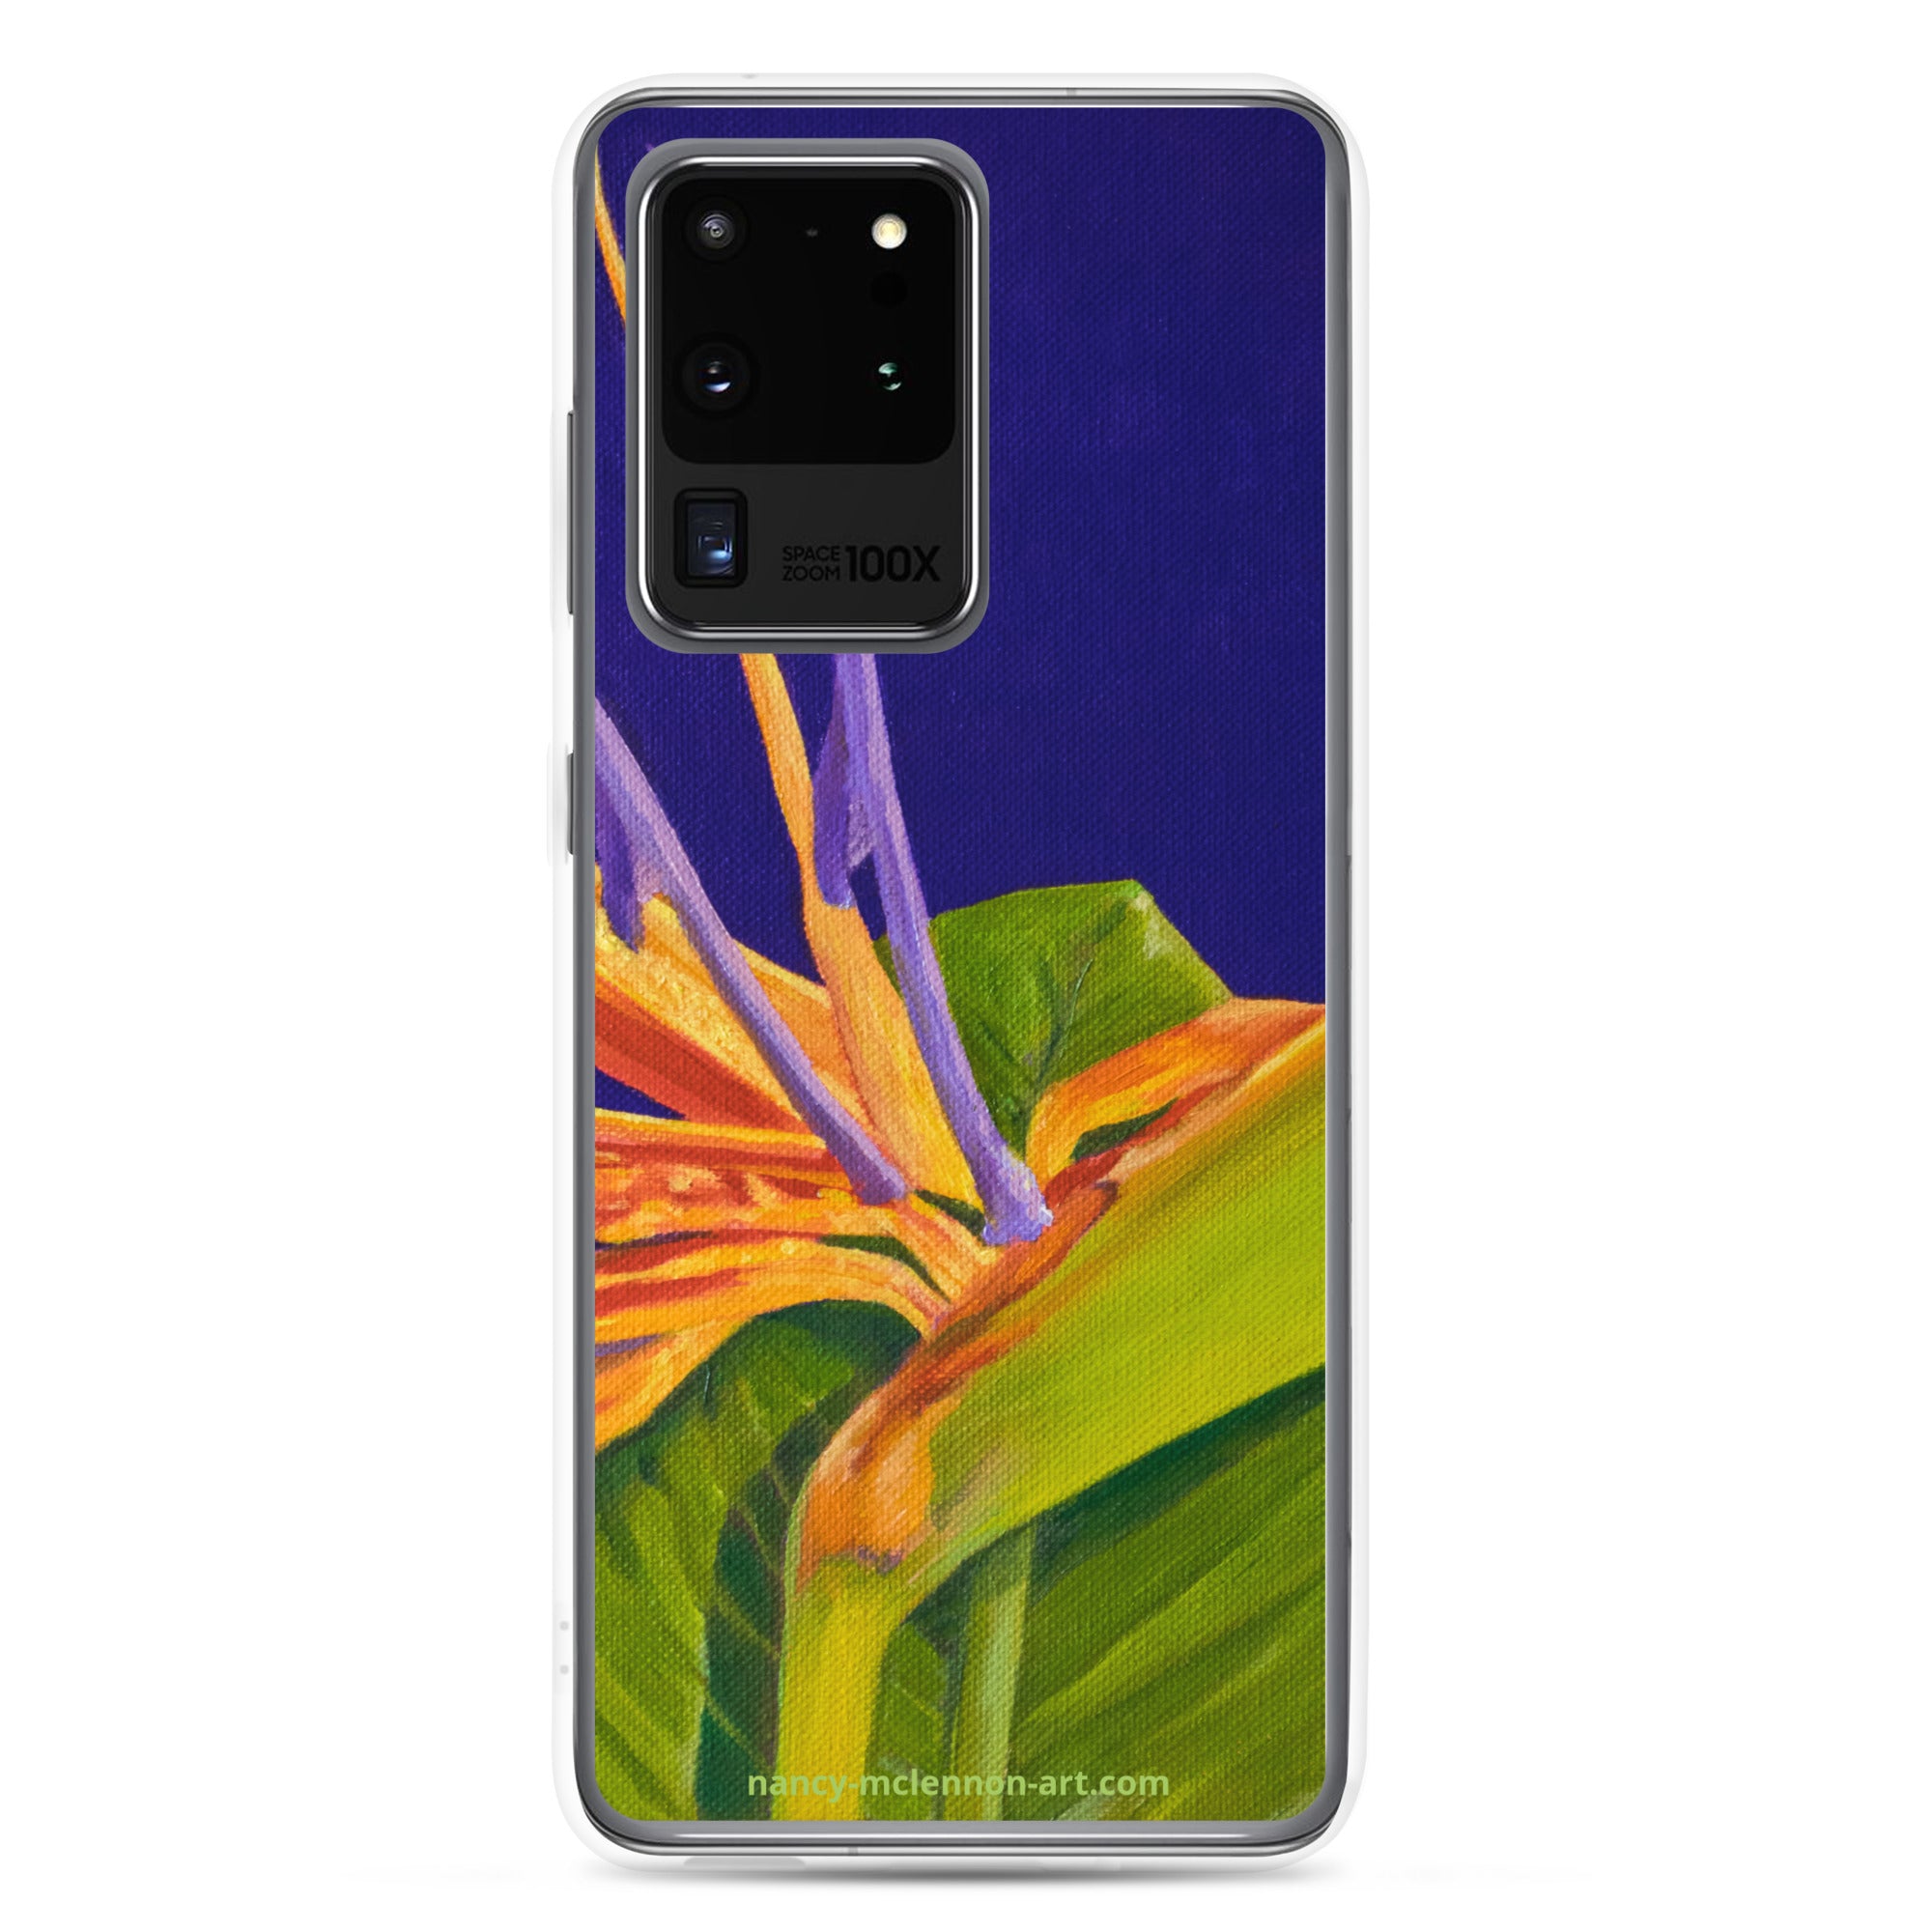 Samsung® Case - Bird of paradise on purple